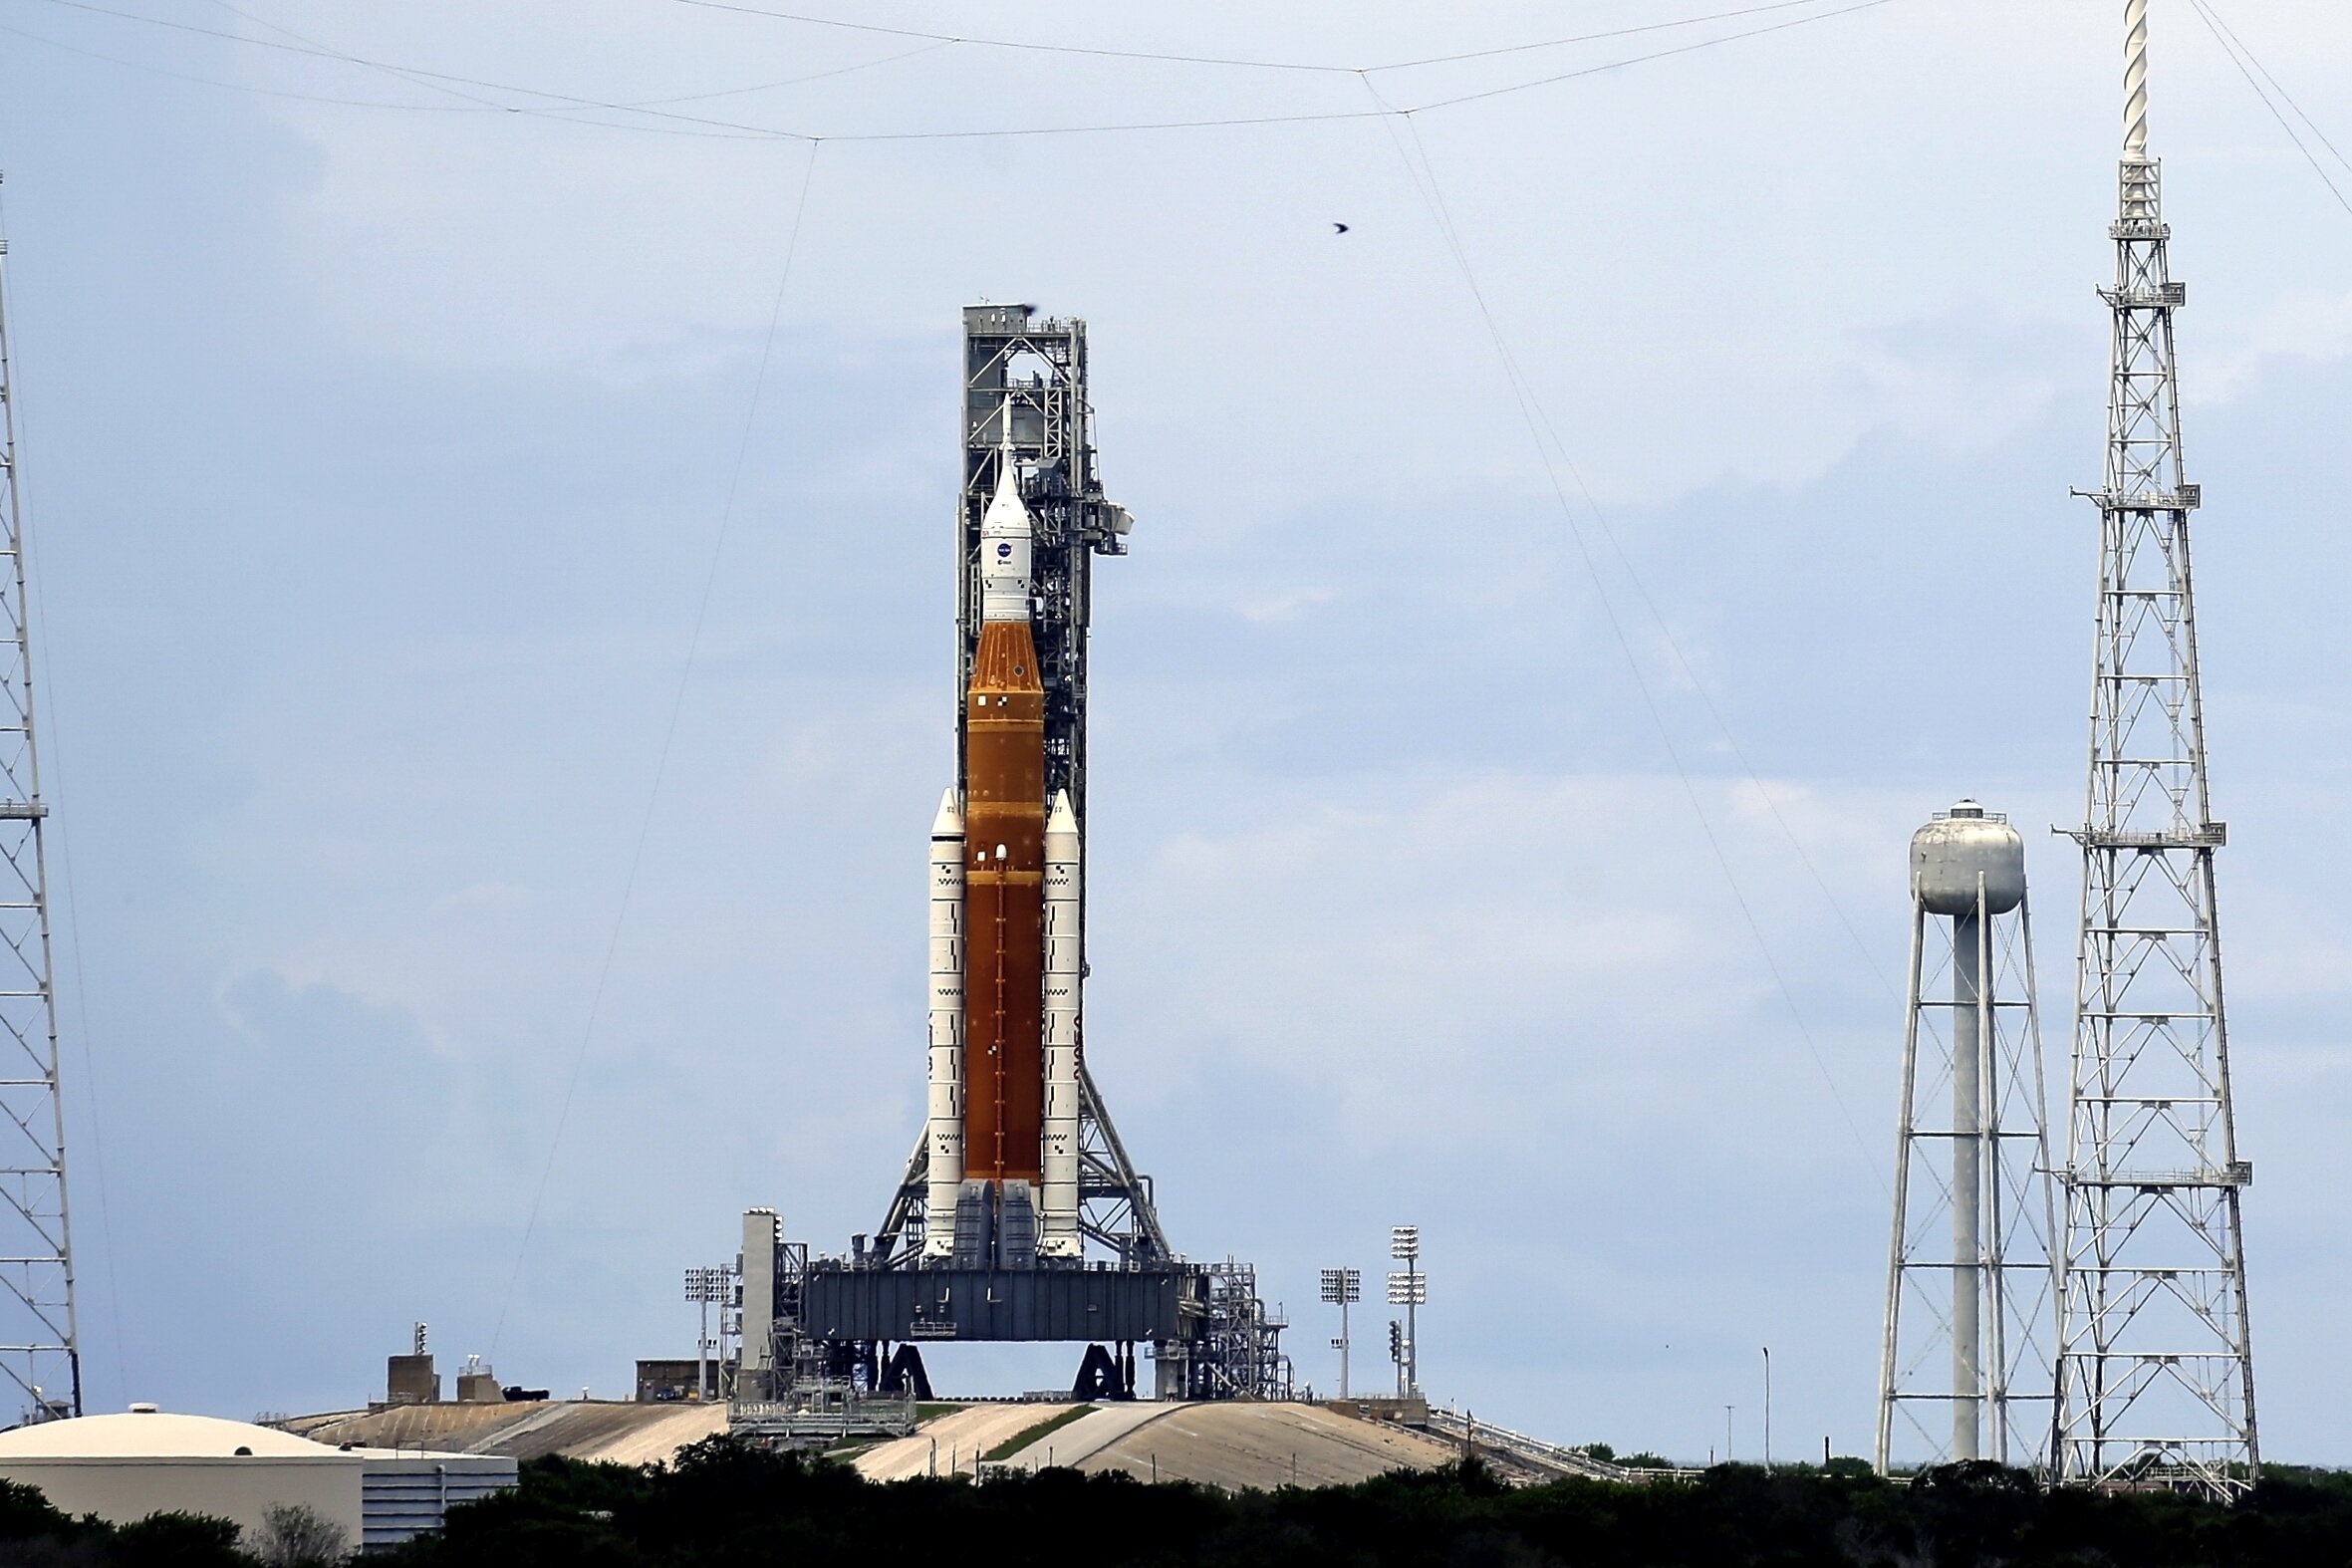 #NASA moon rocket on track for launch despite lightning hits